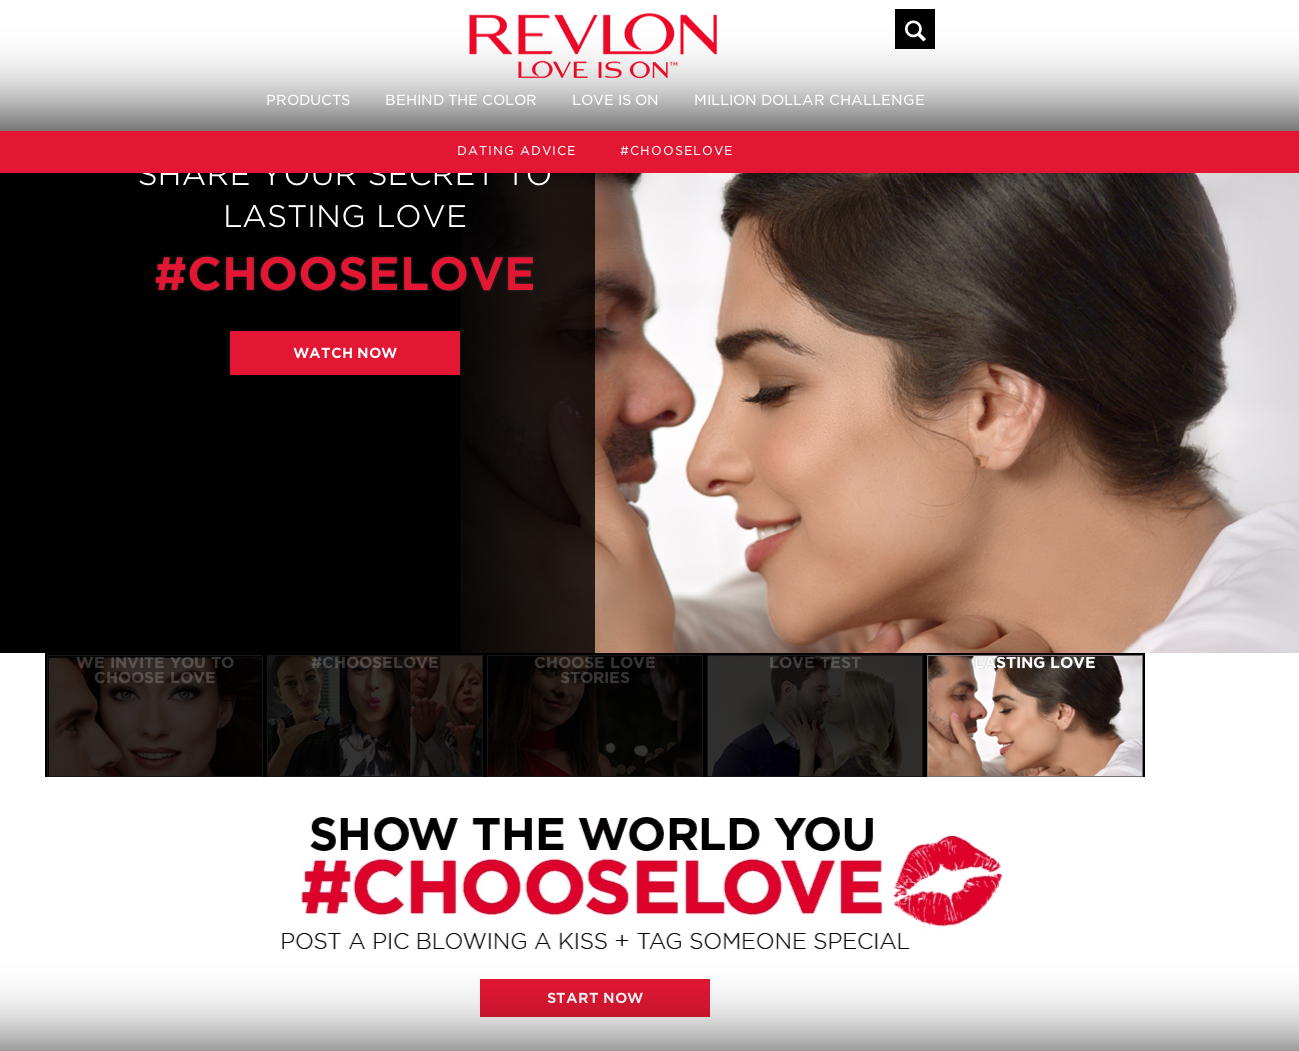 Revlon "Love Is On"